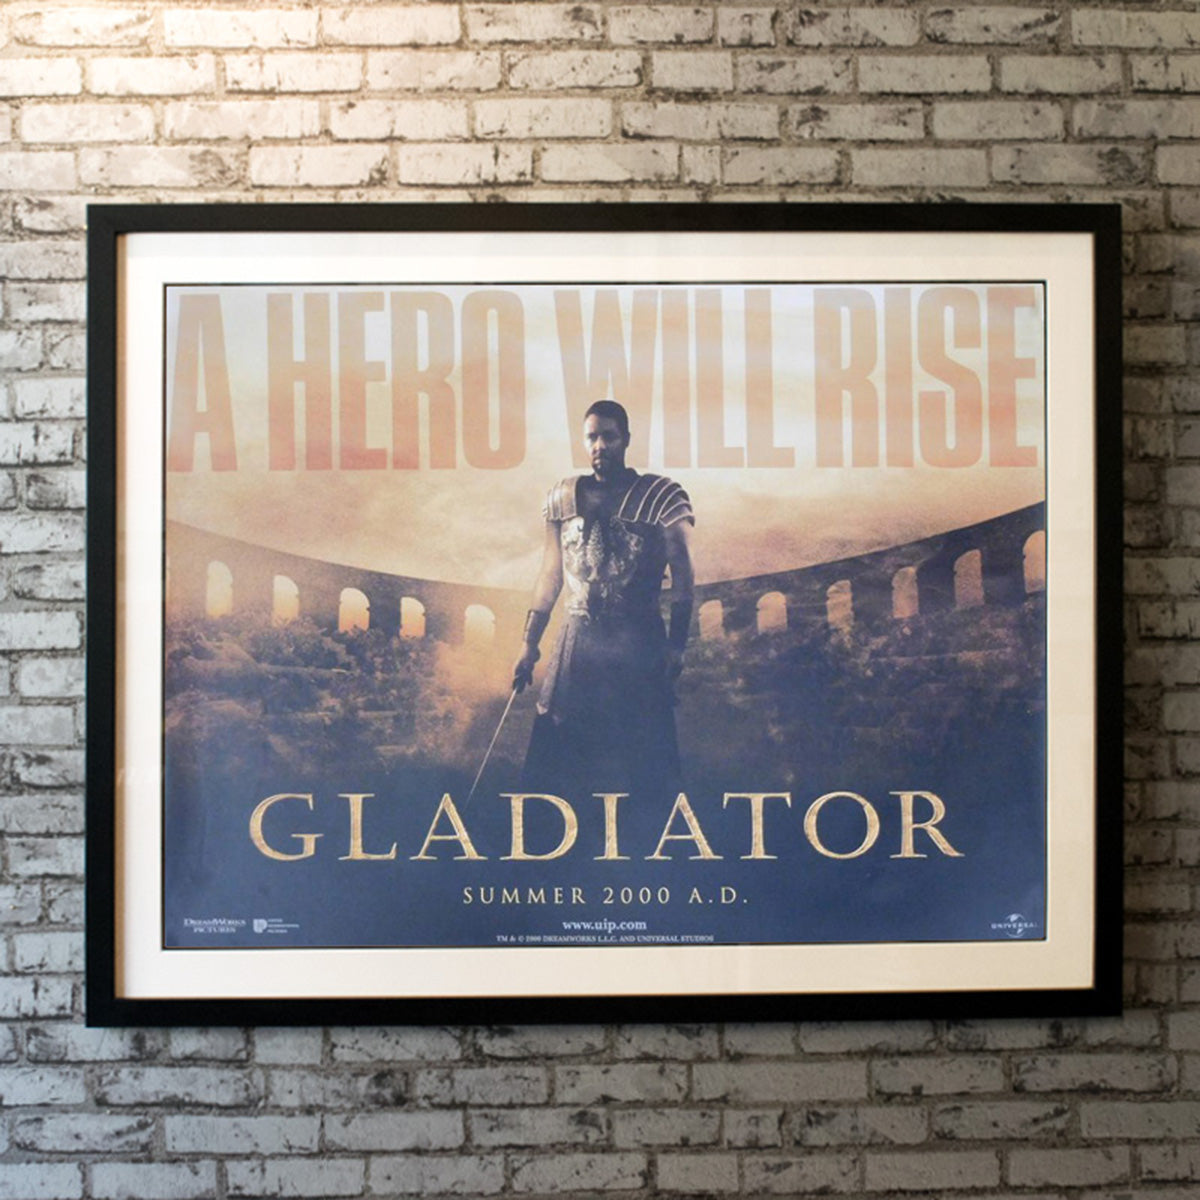 Original Movie Poster of Gladiator (2000)